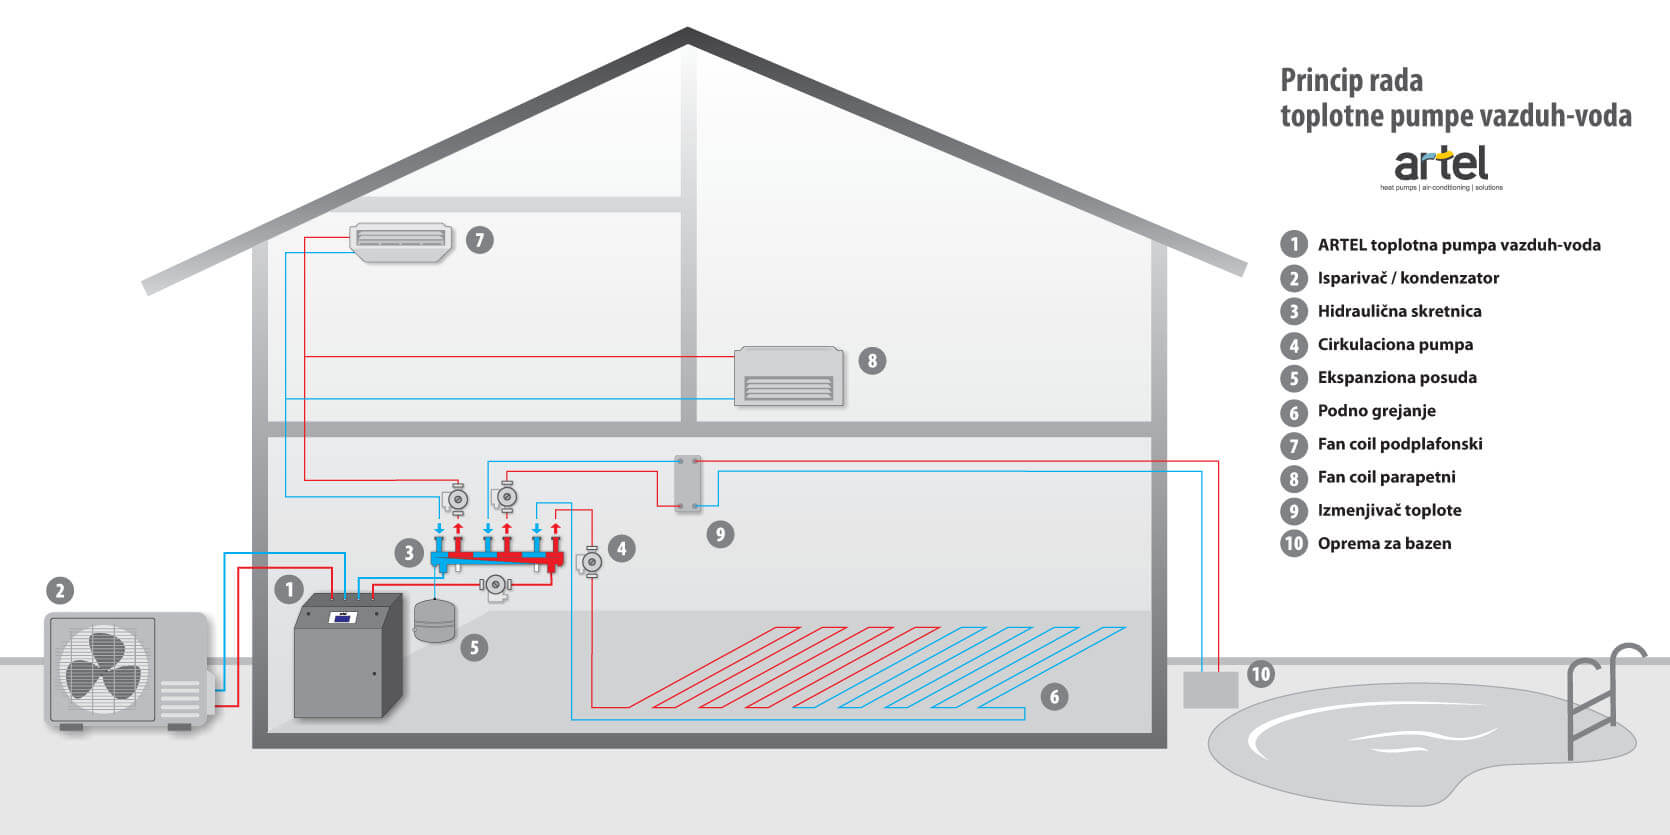 Princip rada toplotne pumpe vazduh-voda